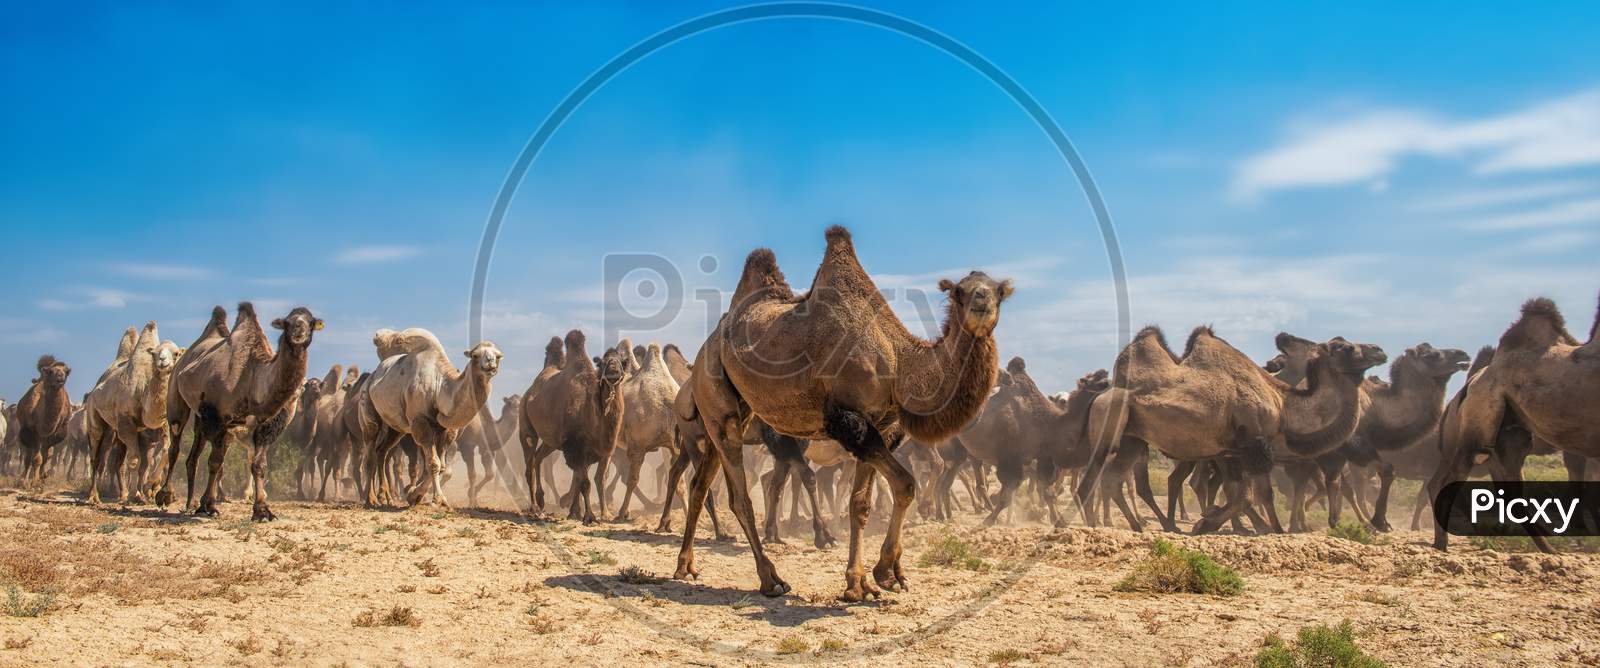 Group Of Camels Walking In Desert